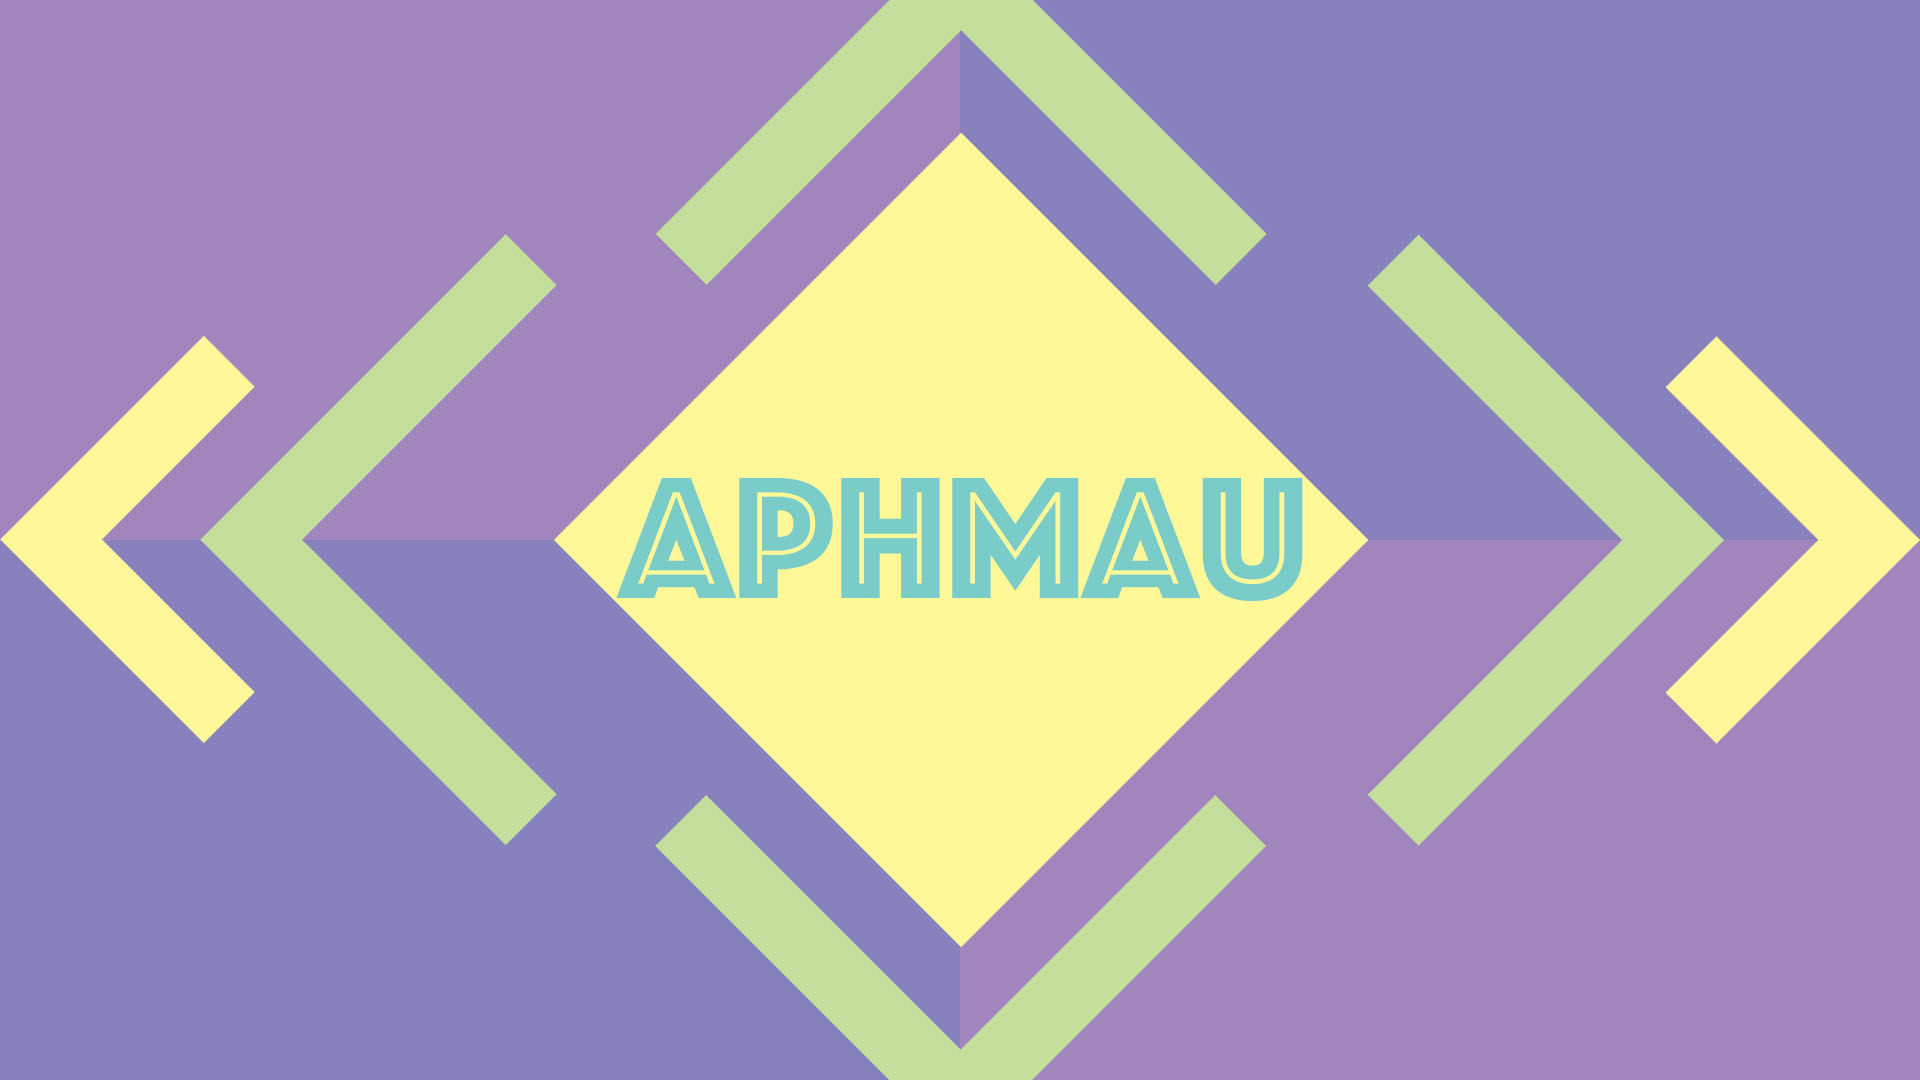 Aphmau Background Checkered By Craymozoid